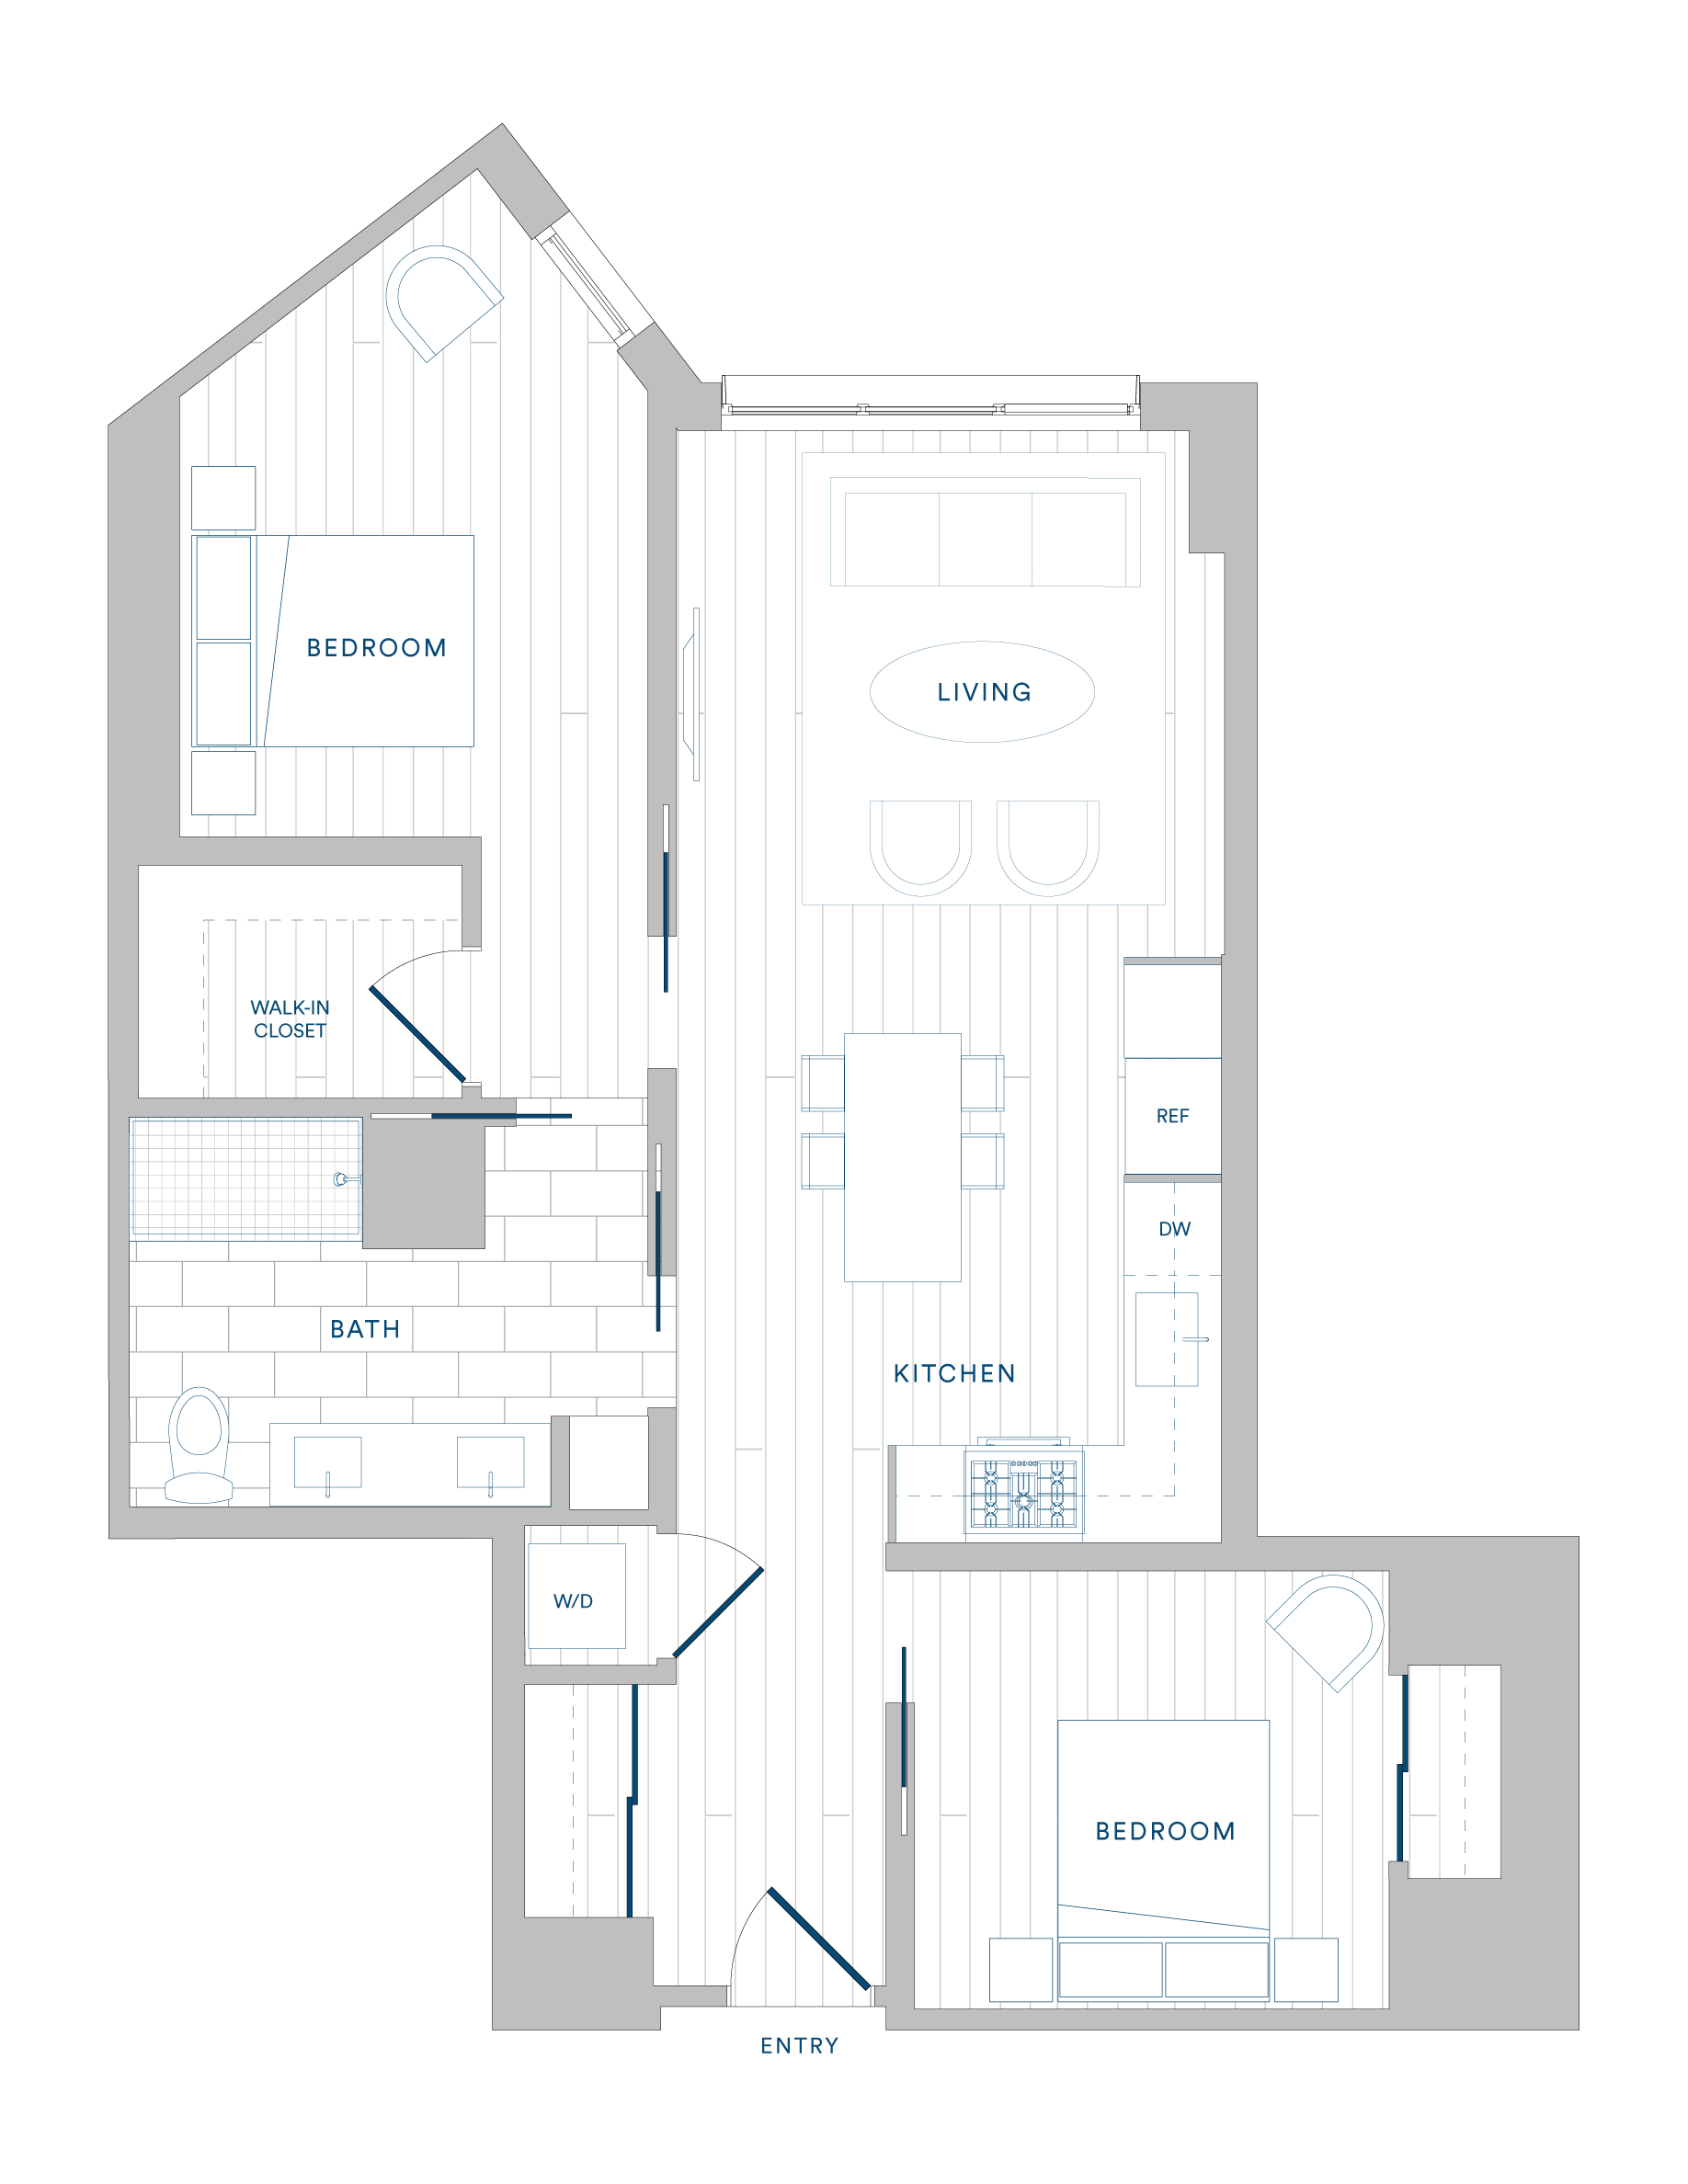 Floorplan for Apartment #1001, 2 bedroom unit at Margarite